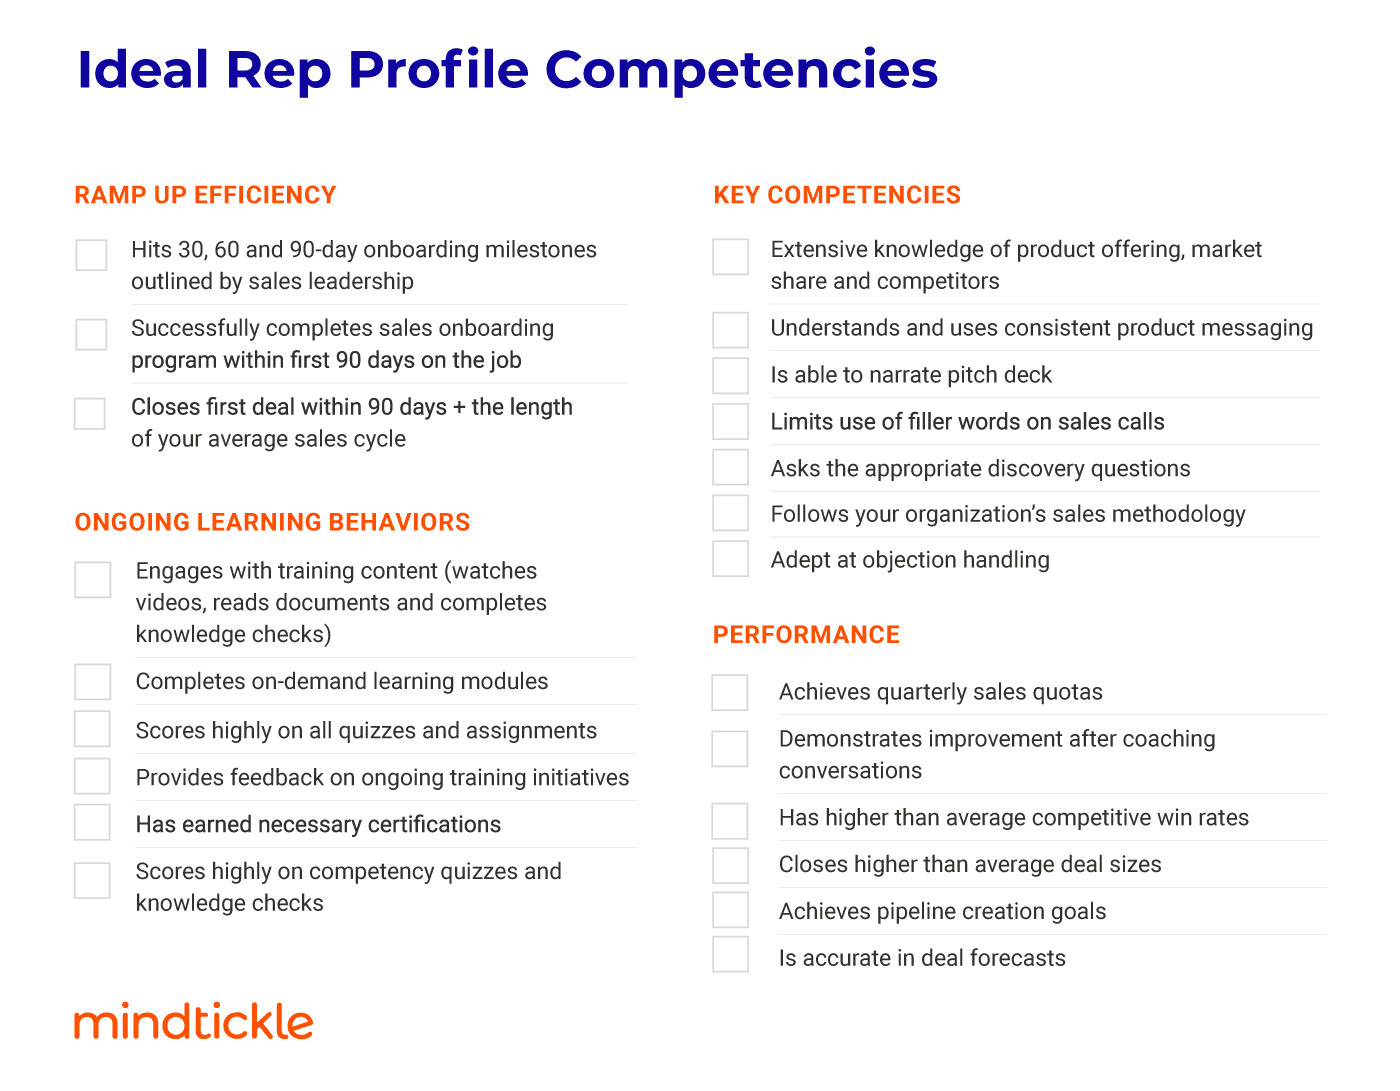 Ideal rep profile key competencies